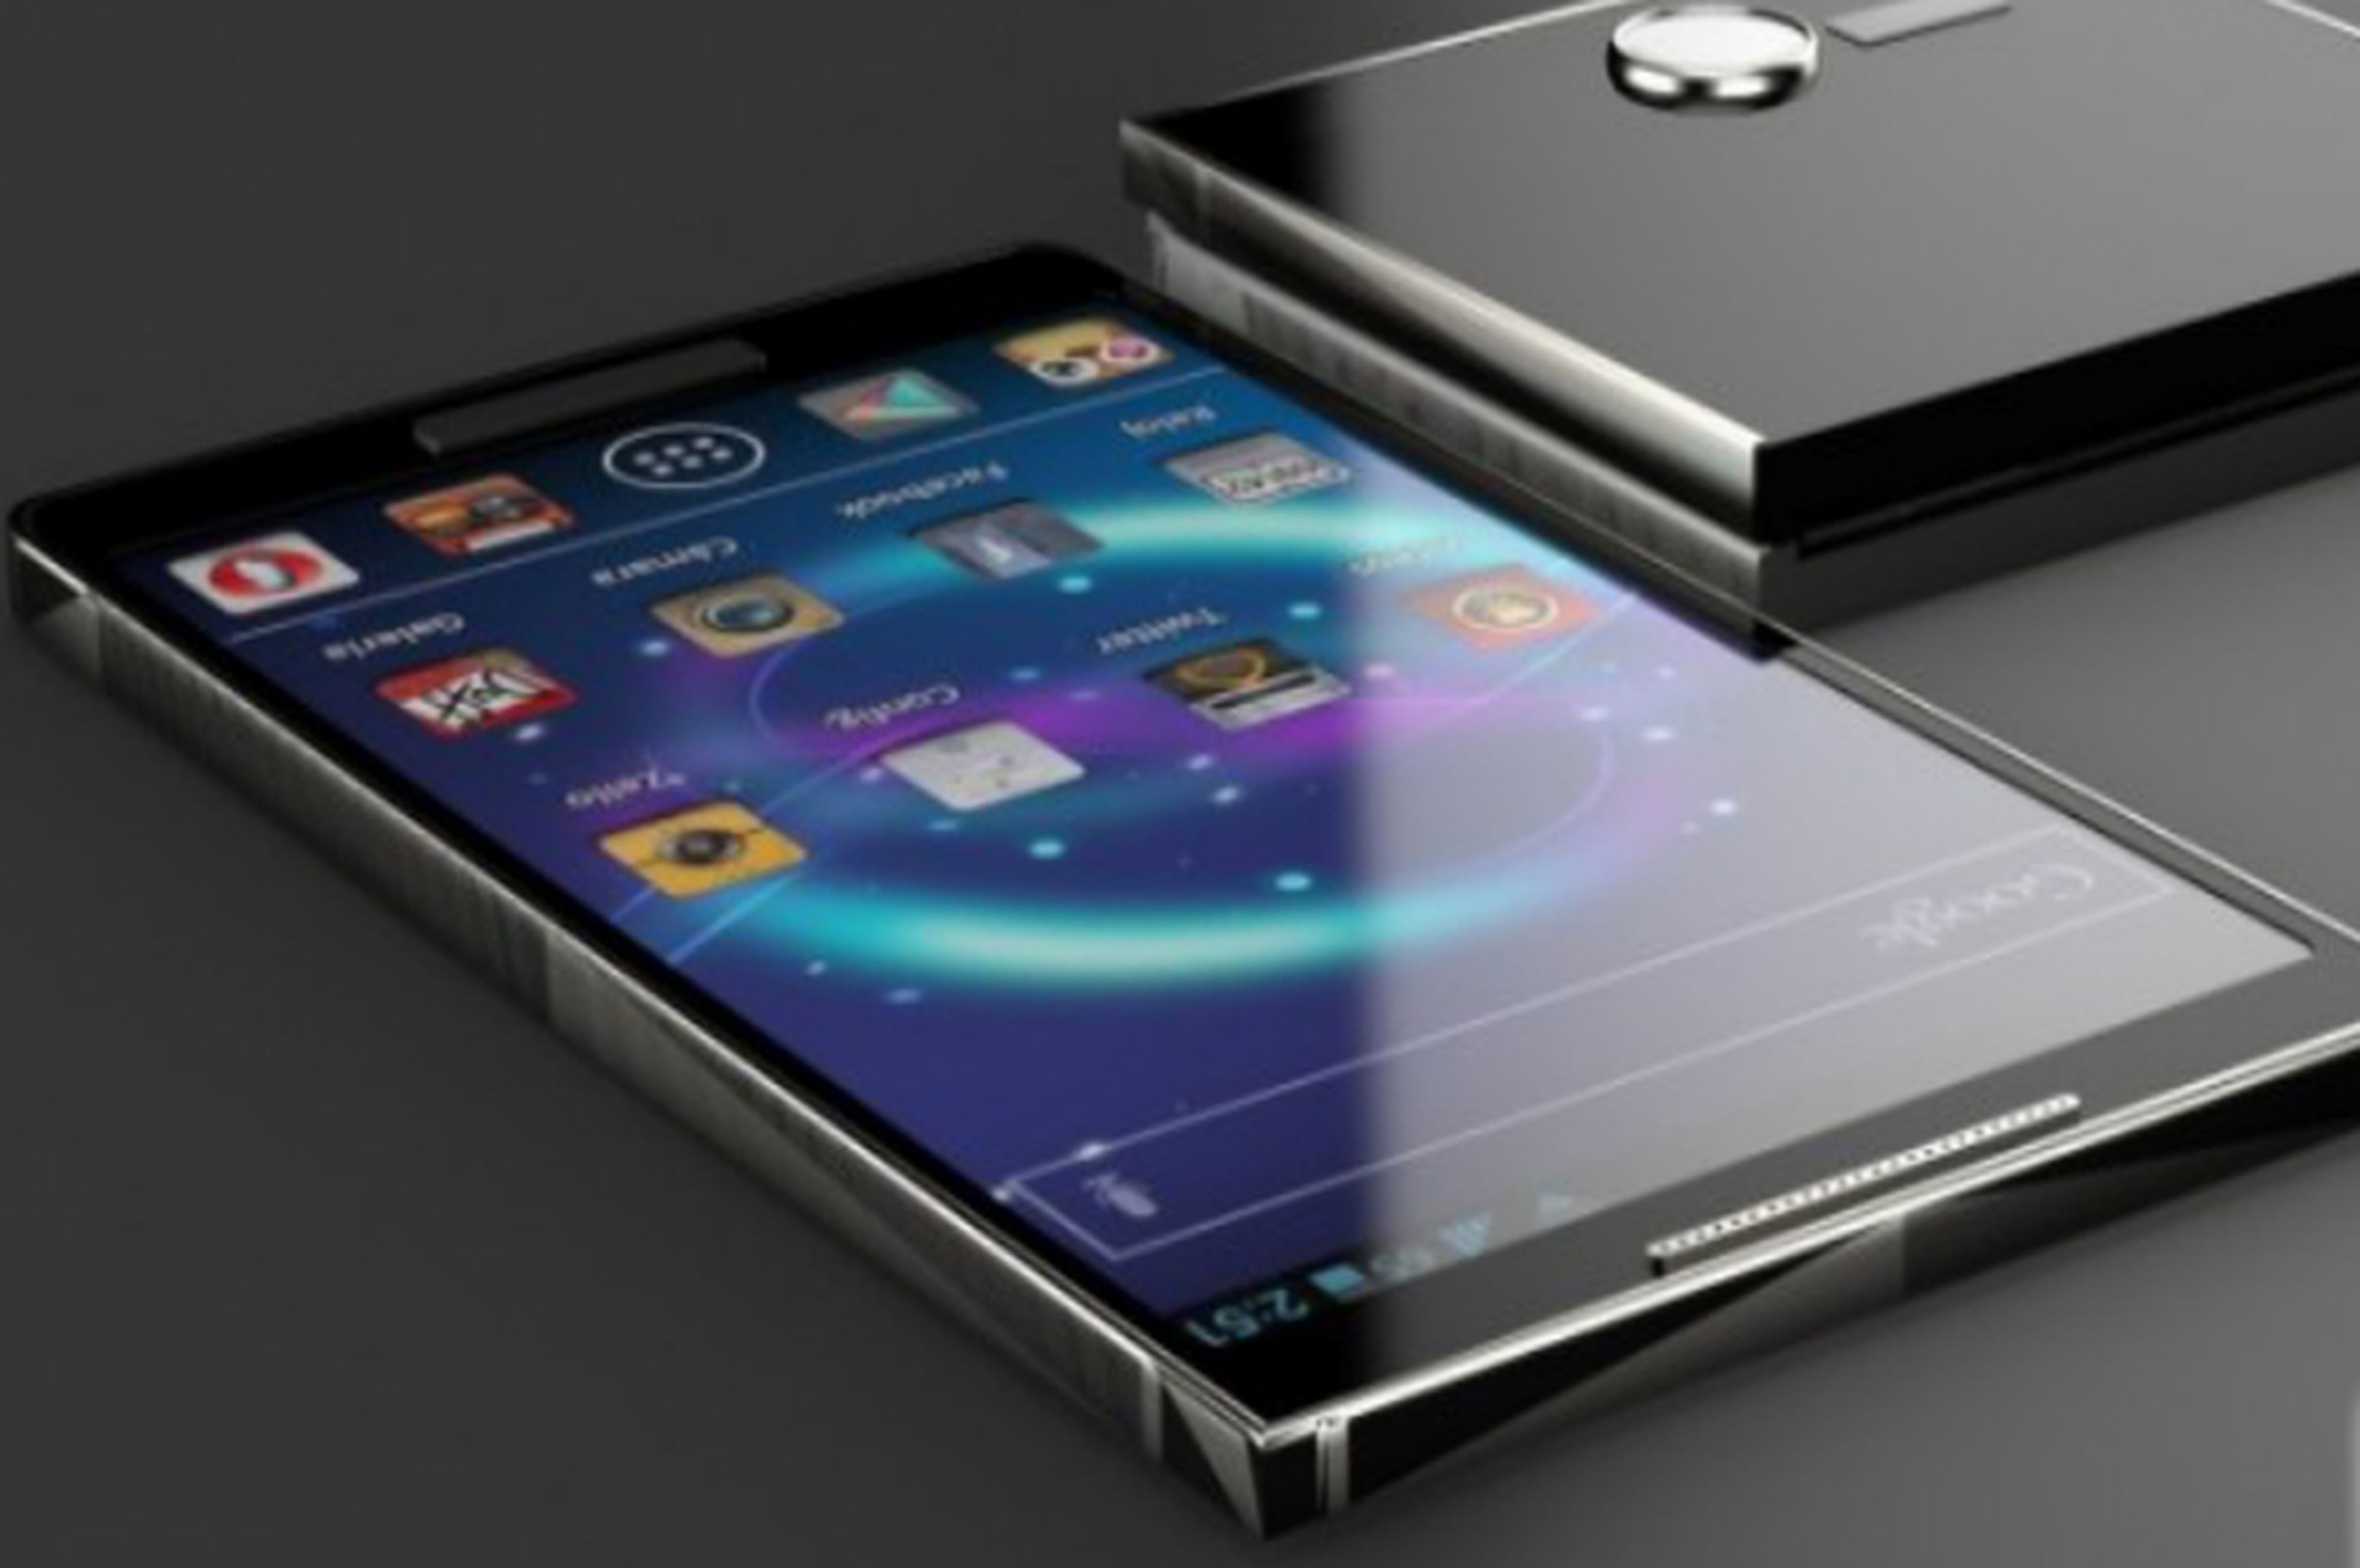 Posible Samsung Galaxy S5